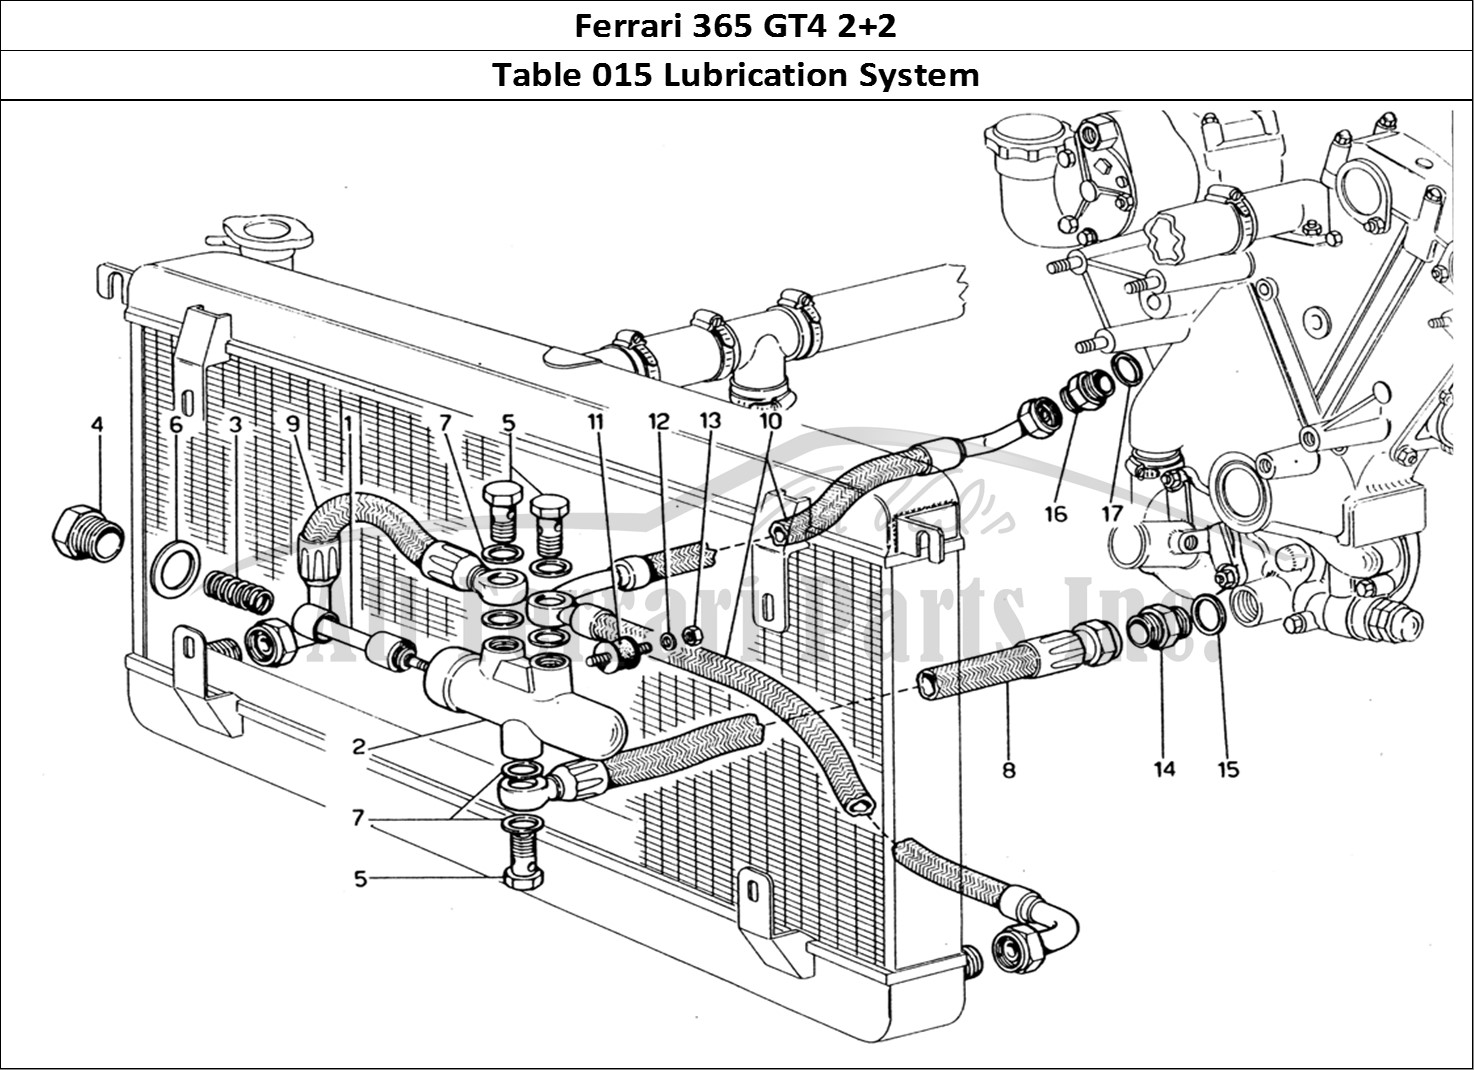 Ferrari Parts Ferrari 365 GT4 2+2 (1973) Page 015 Lubrication System